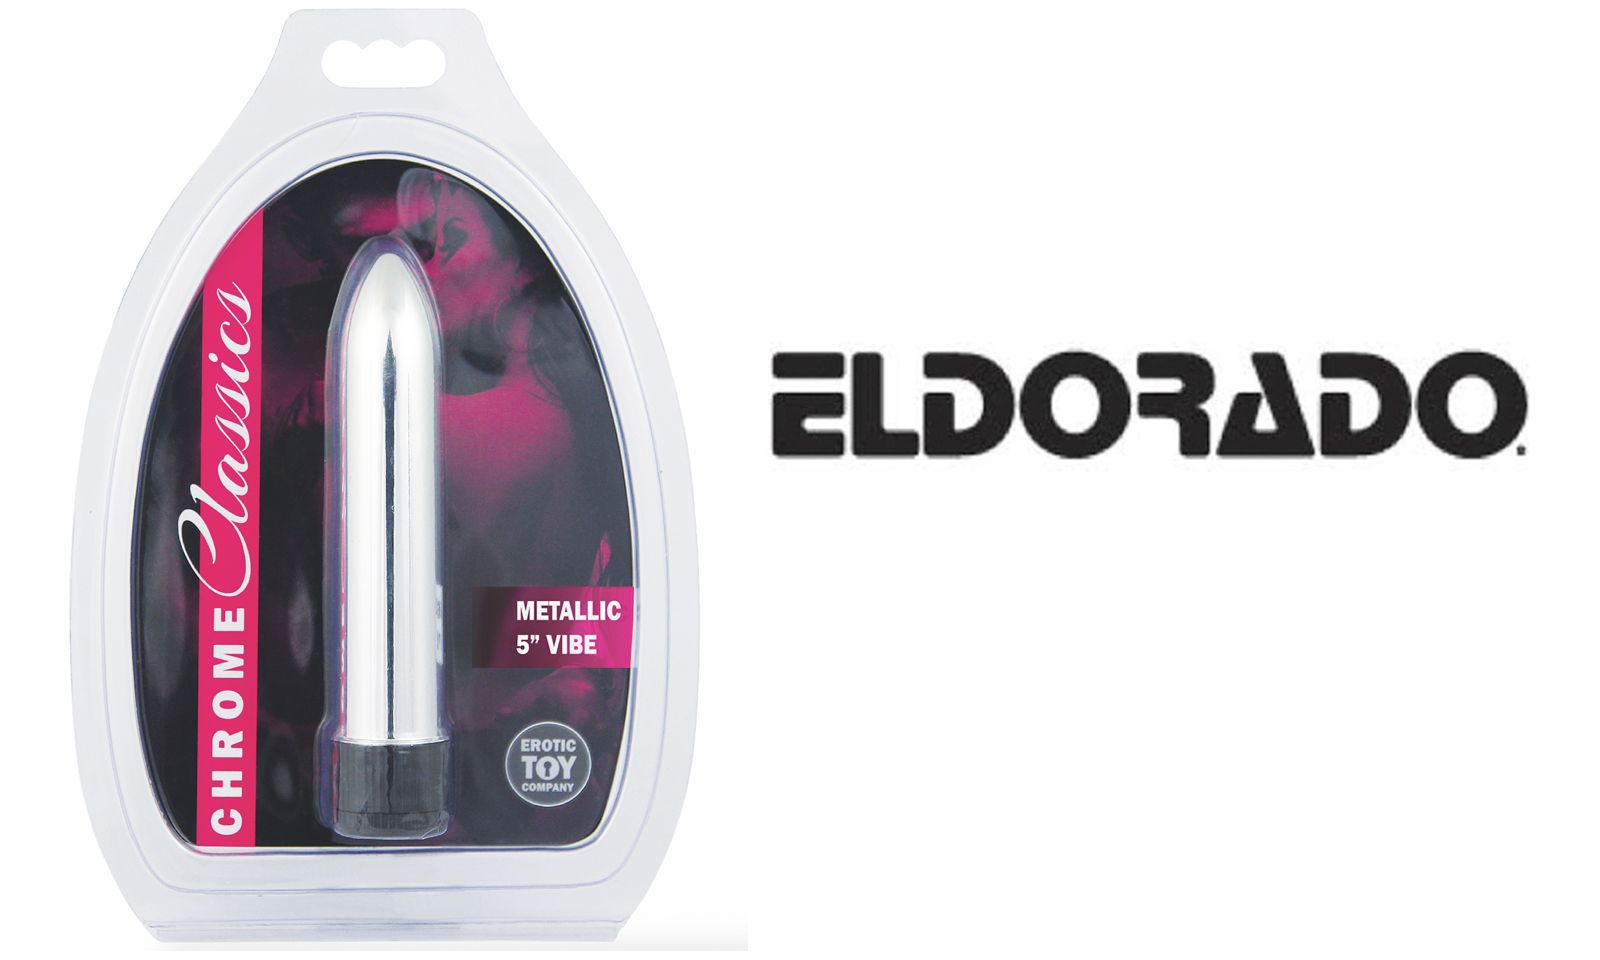 Eldorado Named Exclusive Distributor of Erotic Toy Company’s Chrome Classics